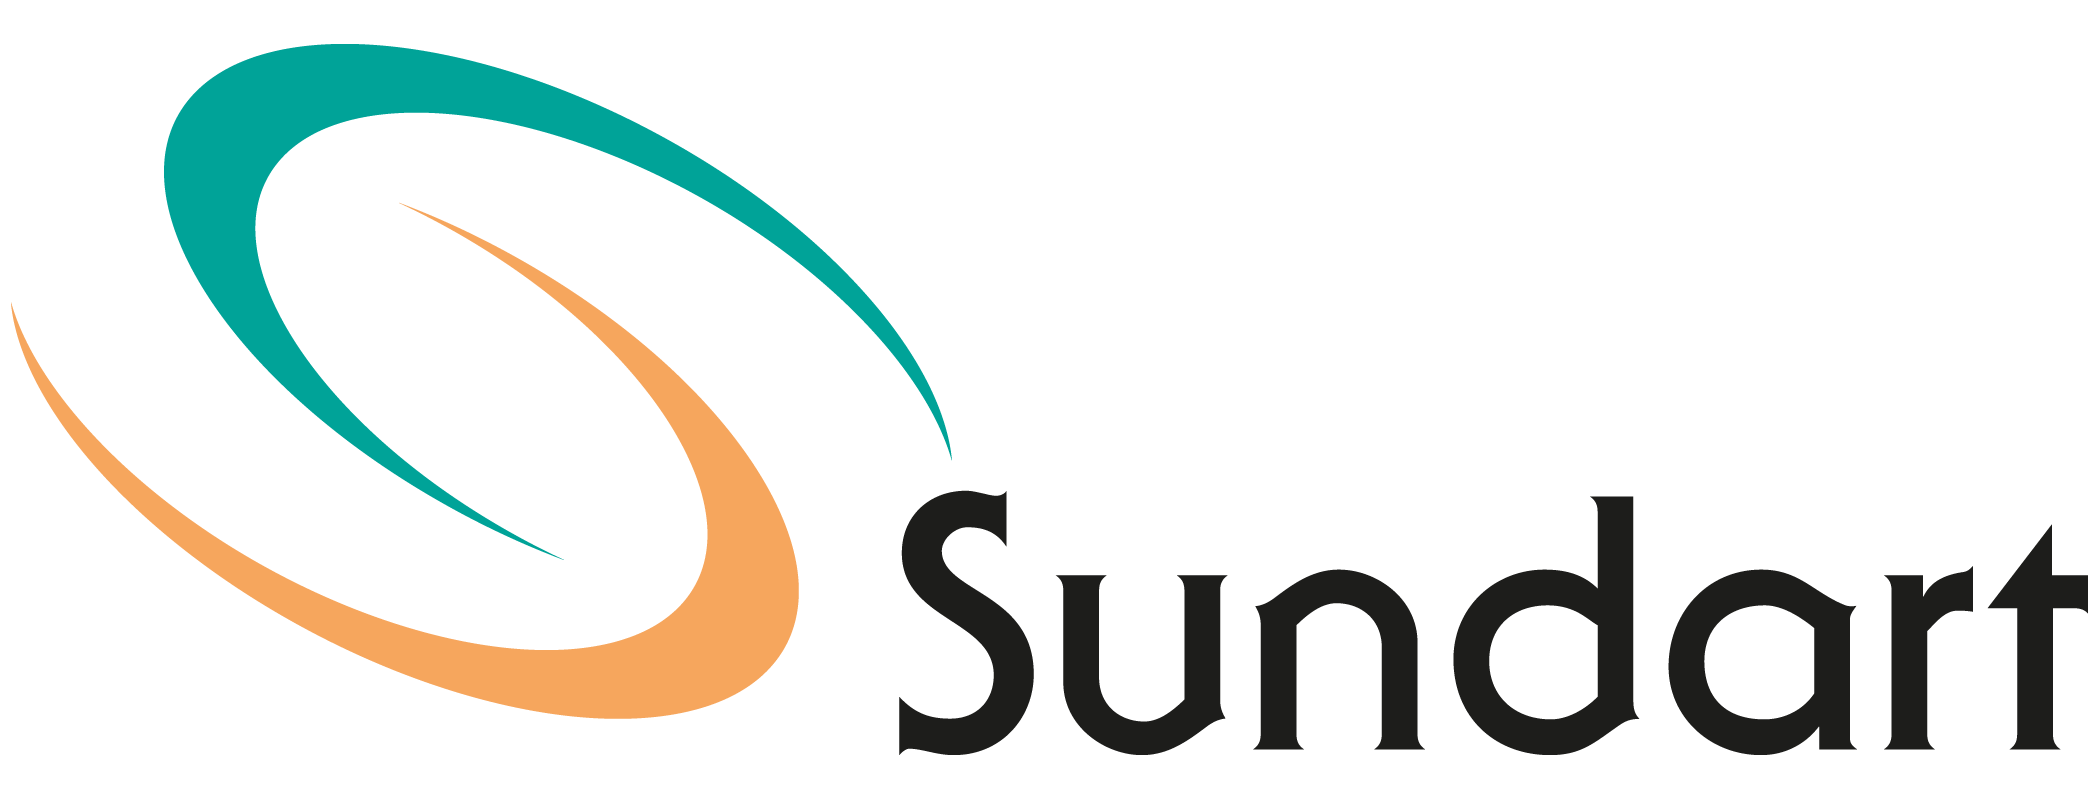 Logo of SUNDART TIMBER PRODUCTS CO., LTD